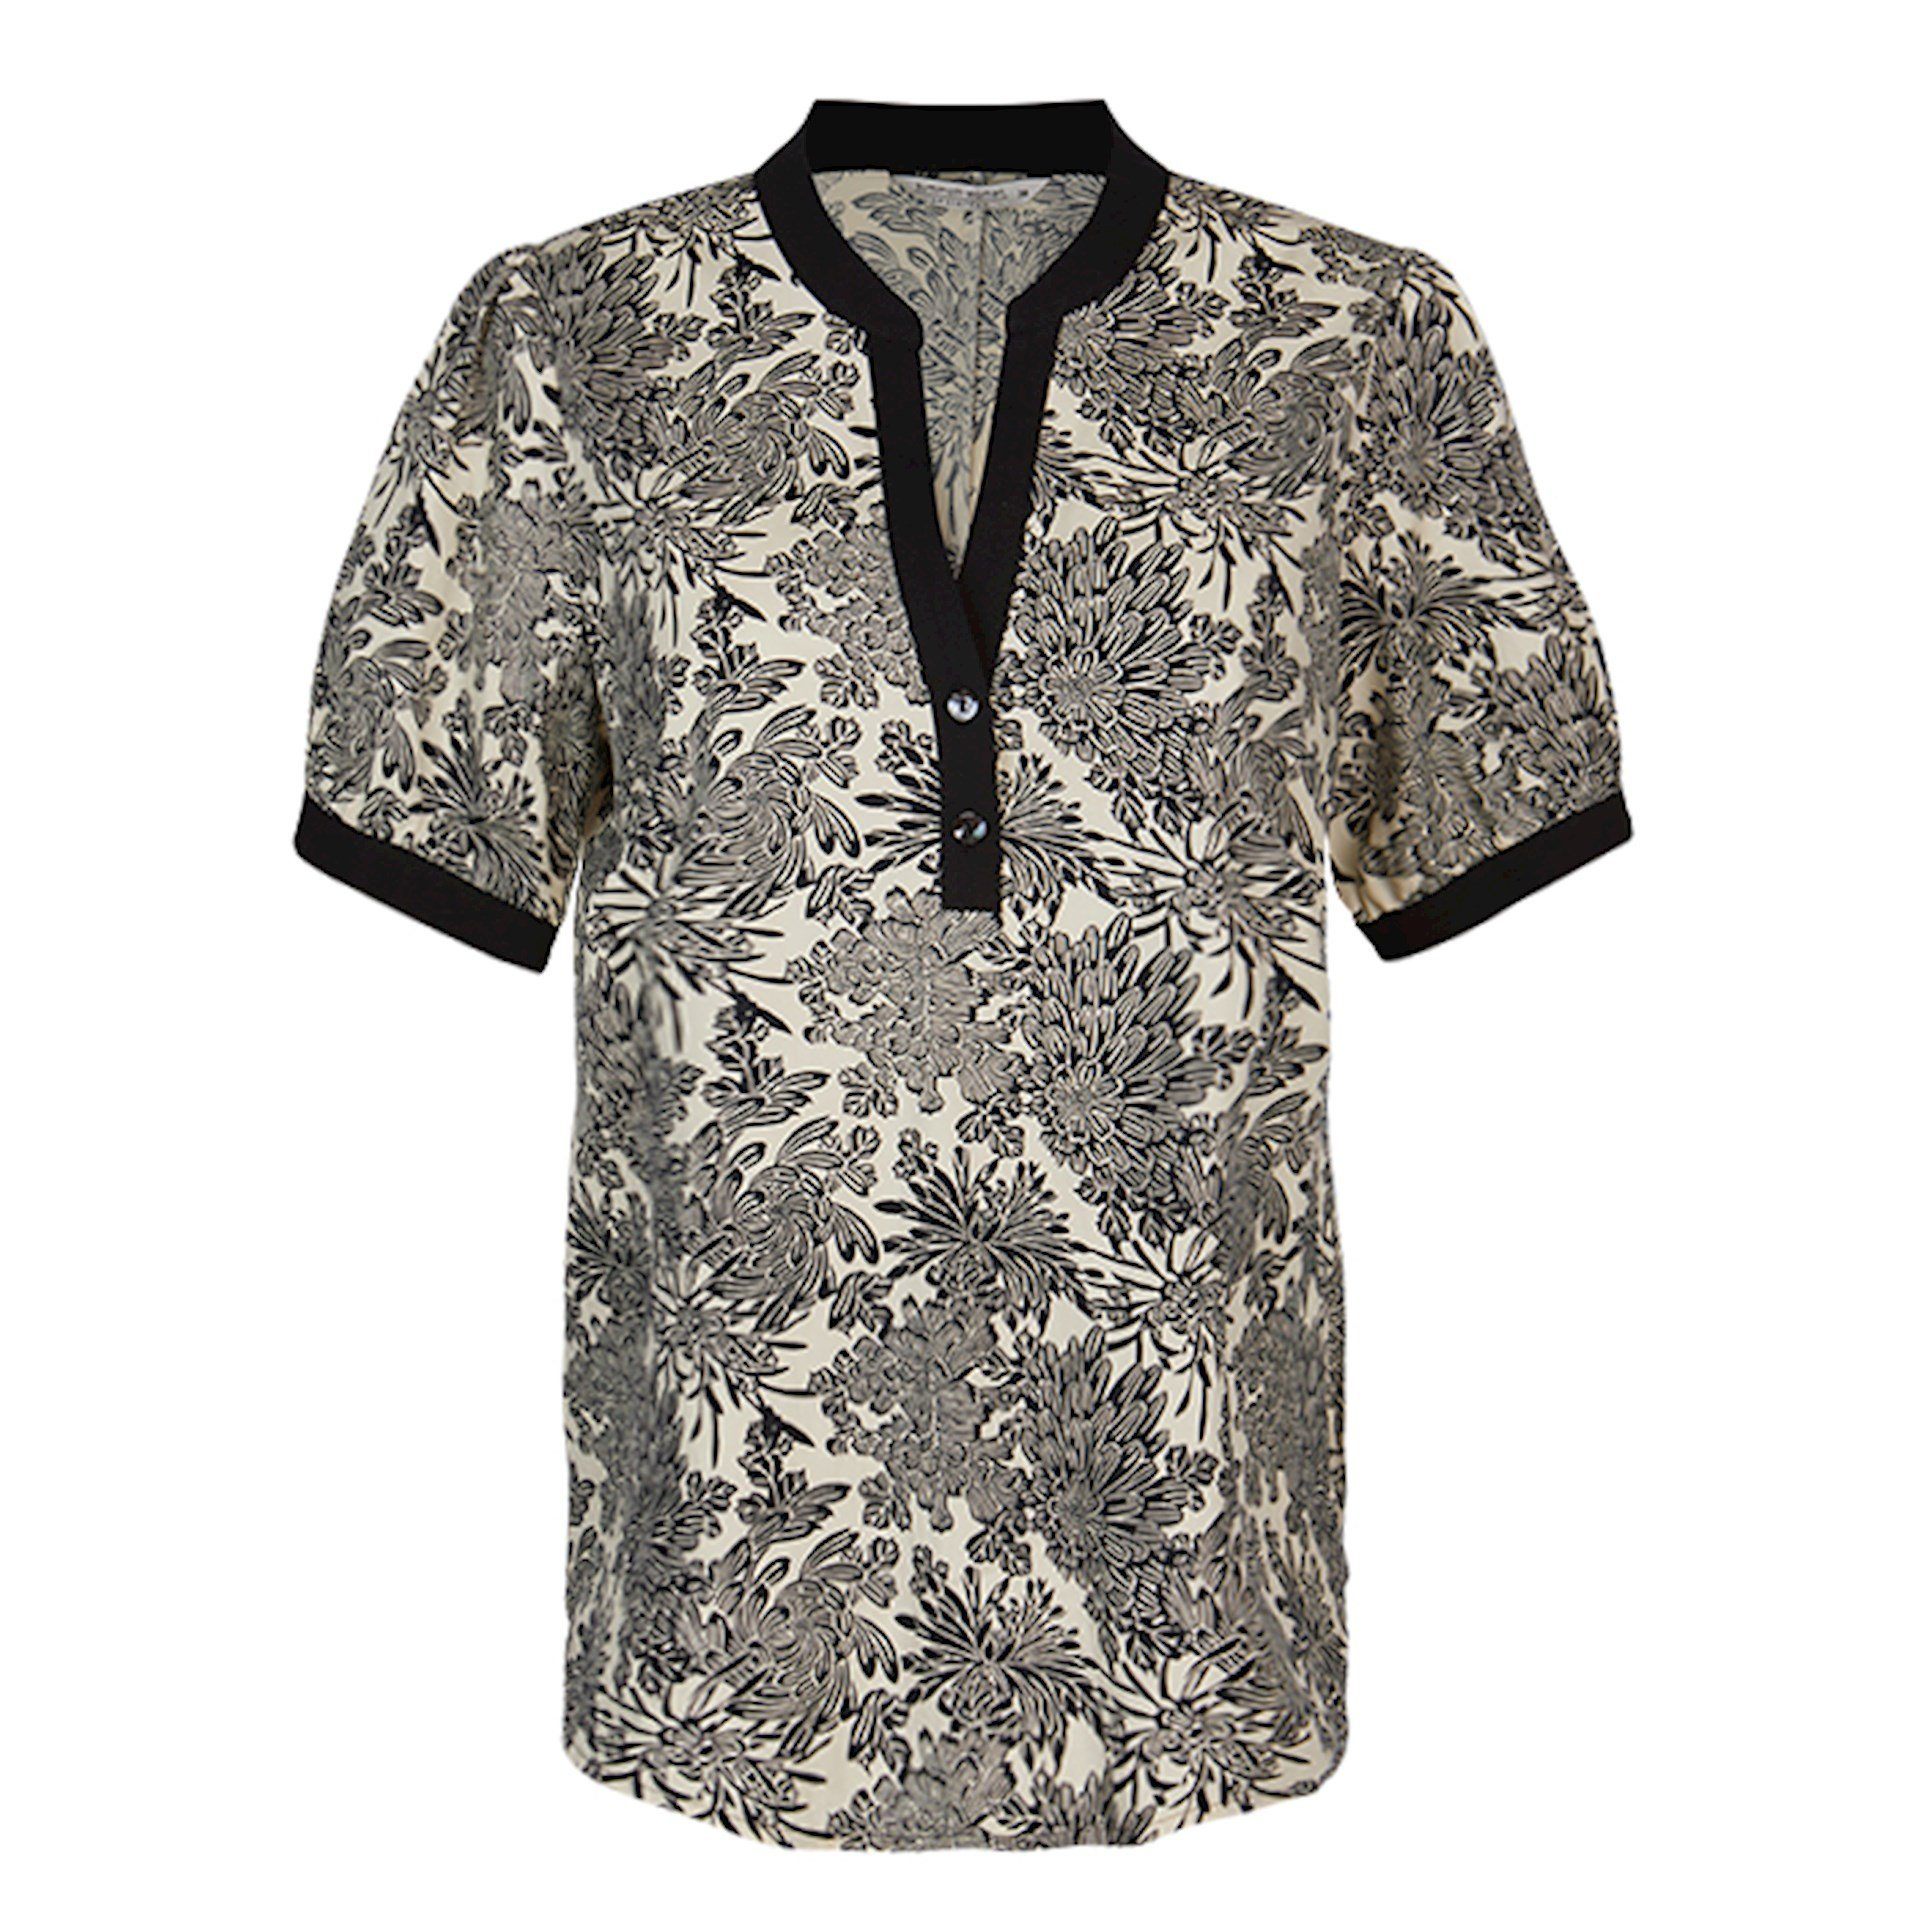 Shirts, T-Shirt Summum Damenoberbekleidung, Tops woman Bluse Muster, florales kurzarm, offwhite-schwarz, summum